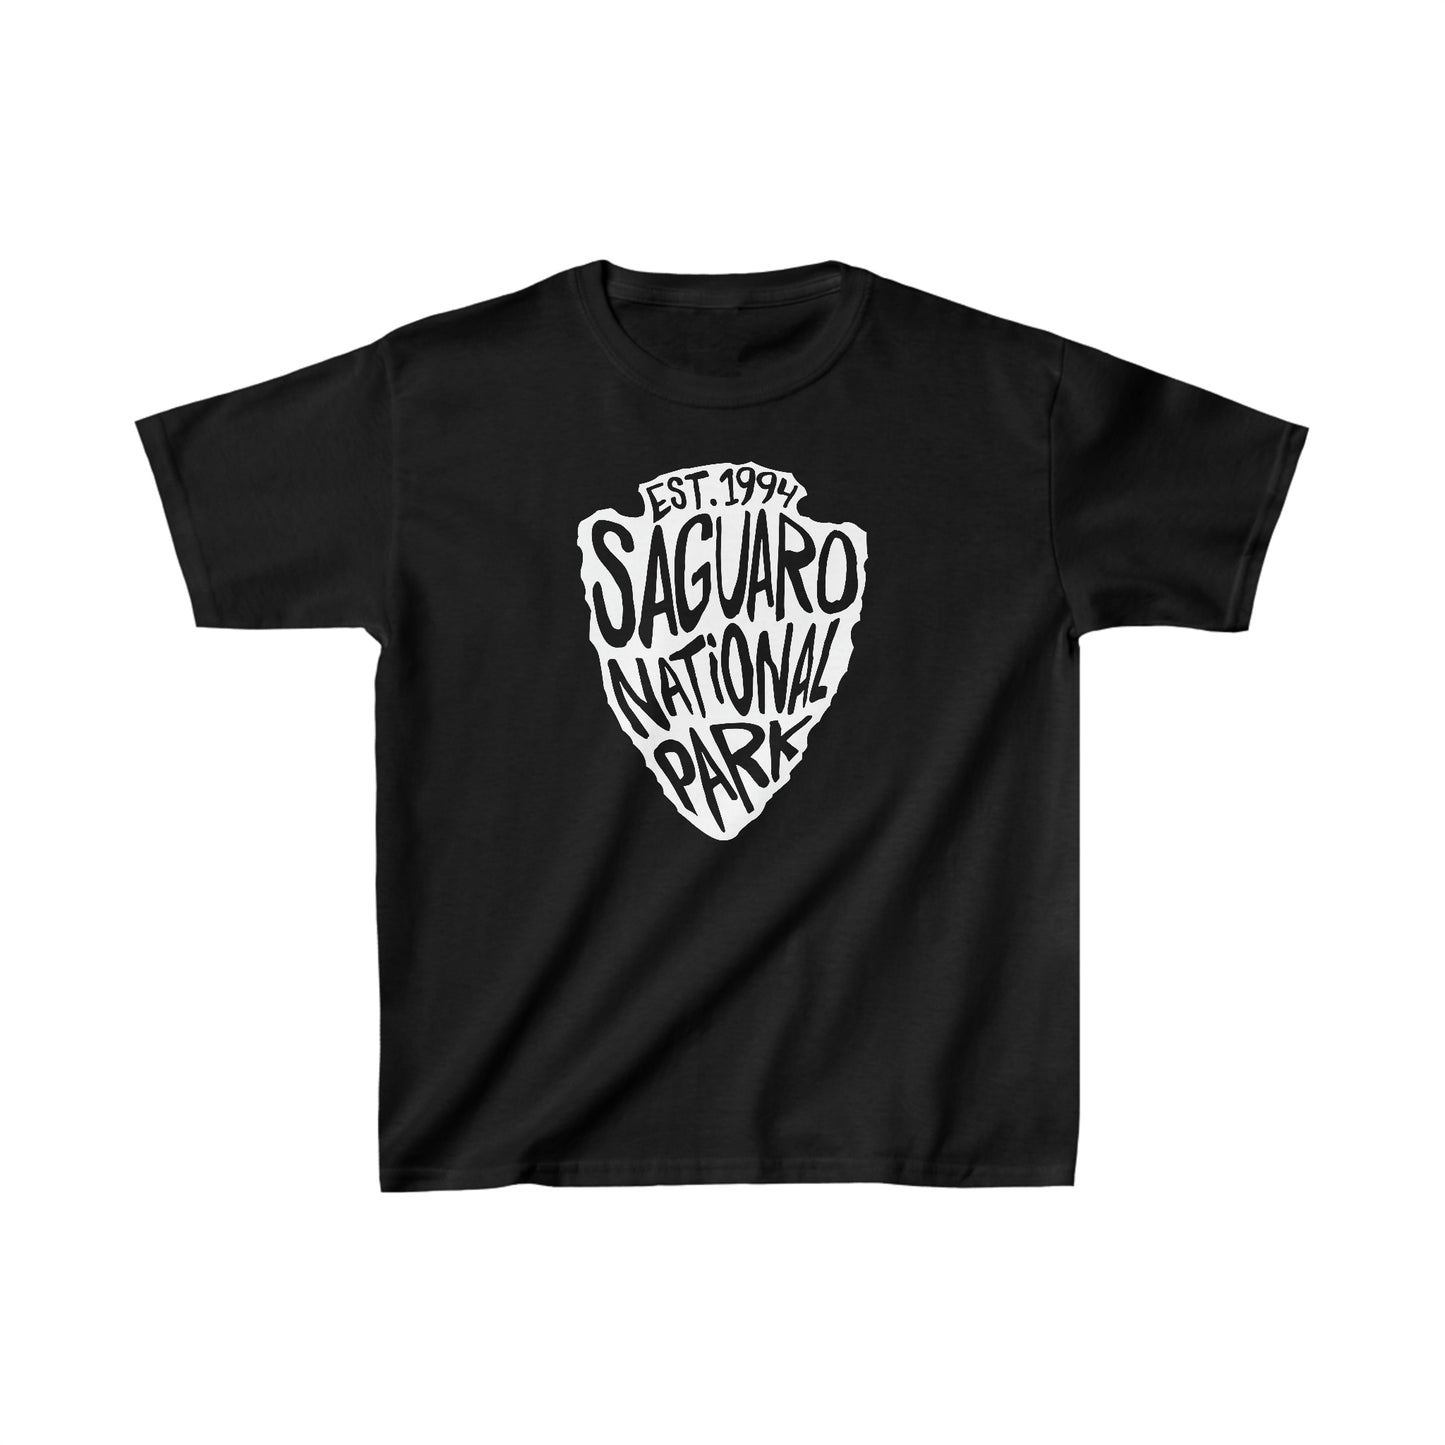 Saguaro National Park Child T-Shirt - Arrowhead Design